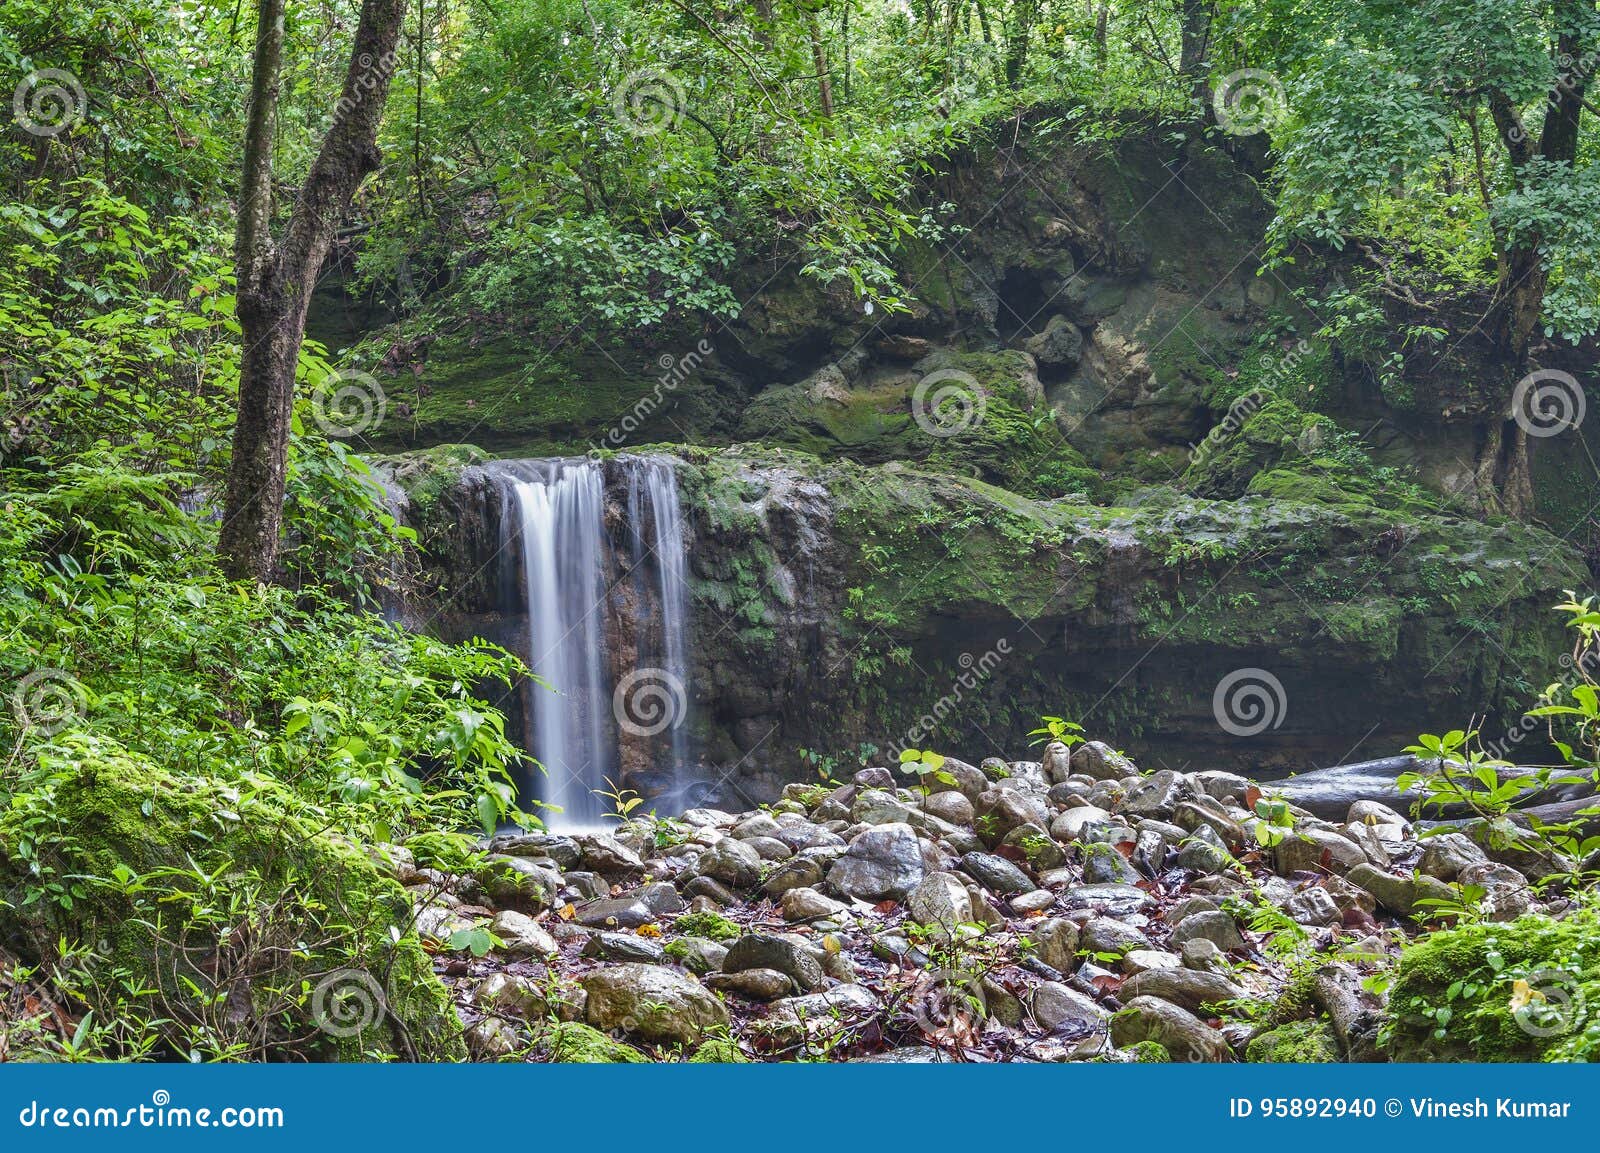 nature water falls: beauty of jim corbett forest